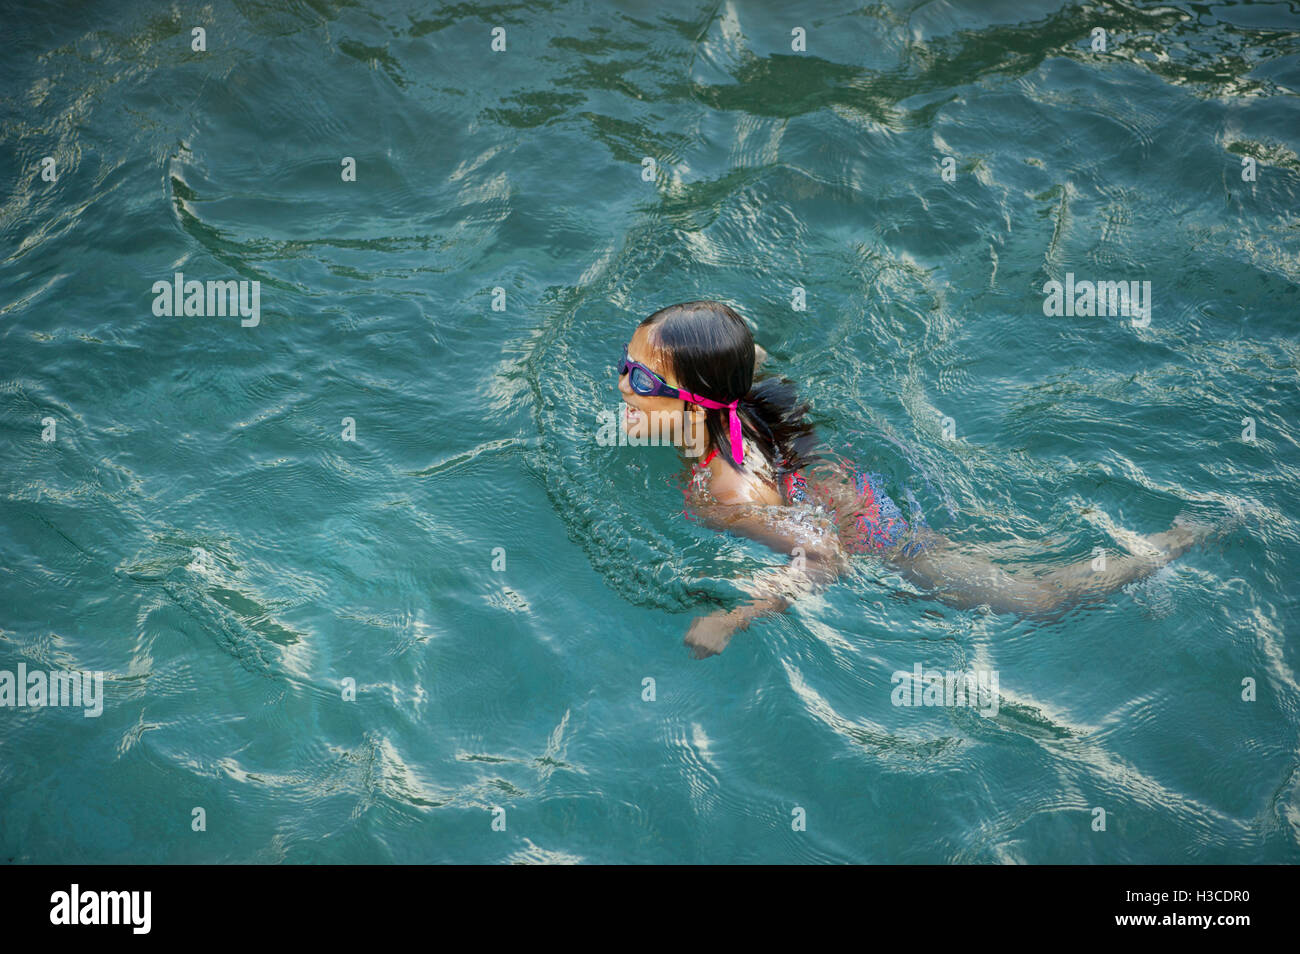 Girl swimming in pool Stock Photo